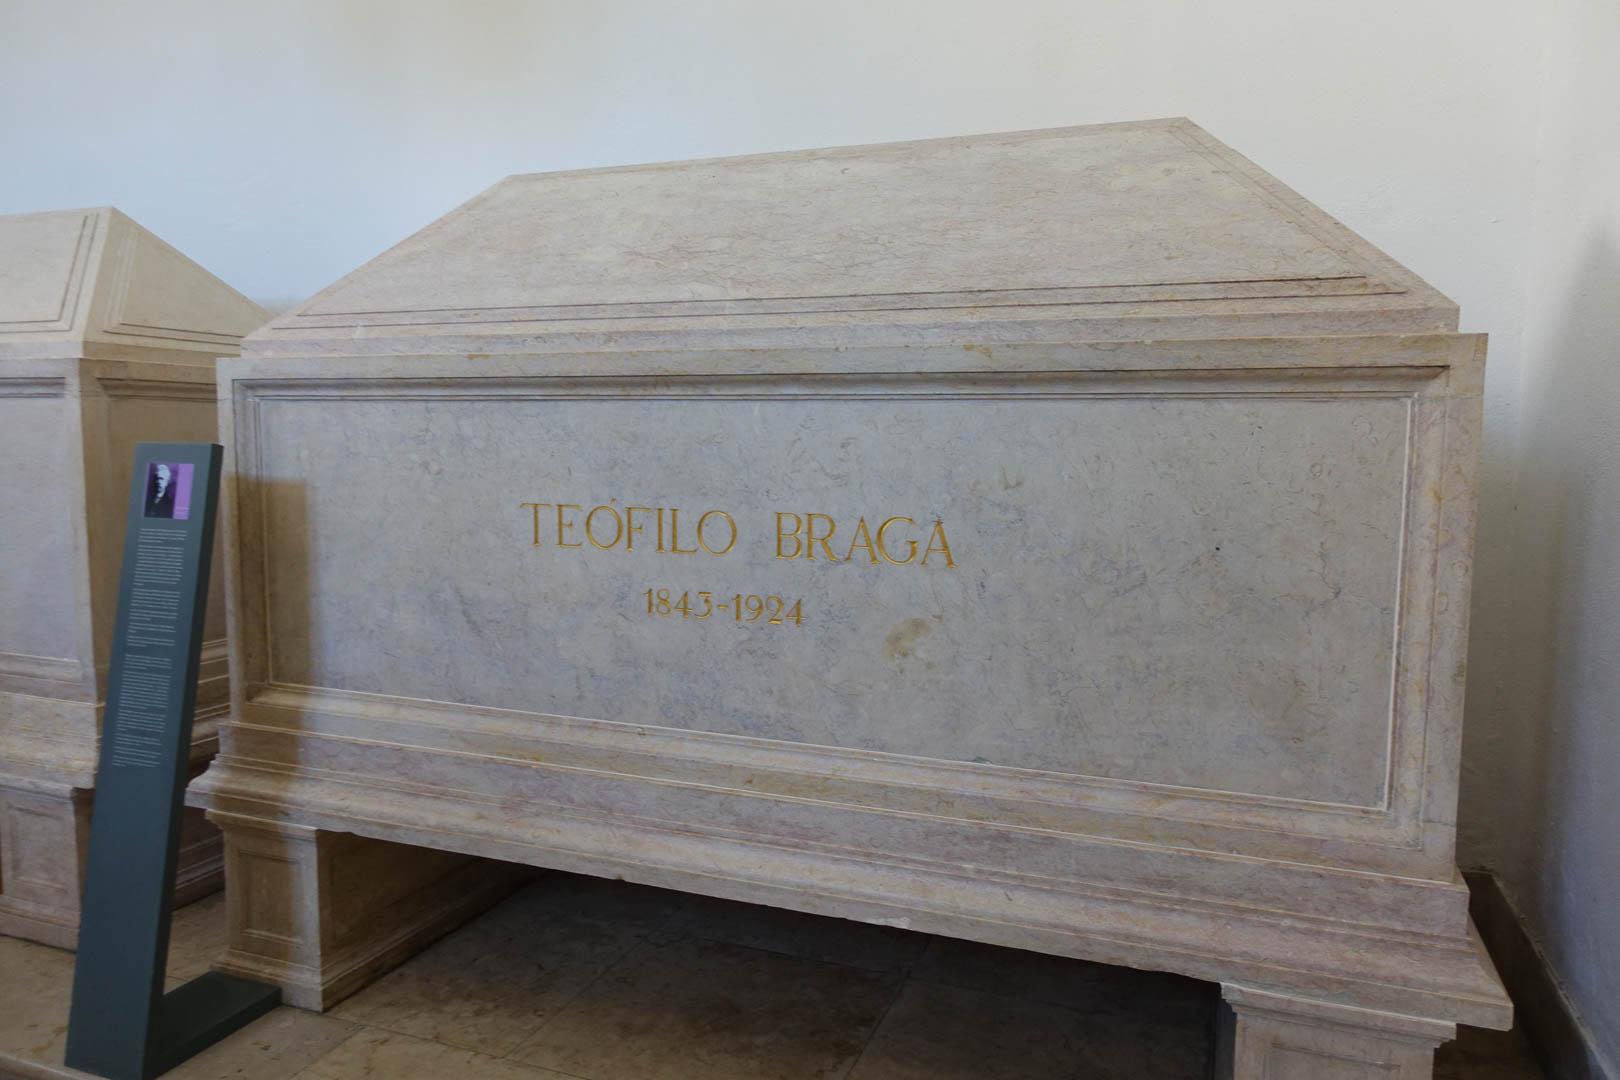 tomb of teofilo braga in panteao nacional